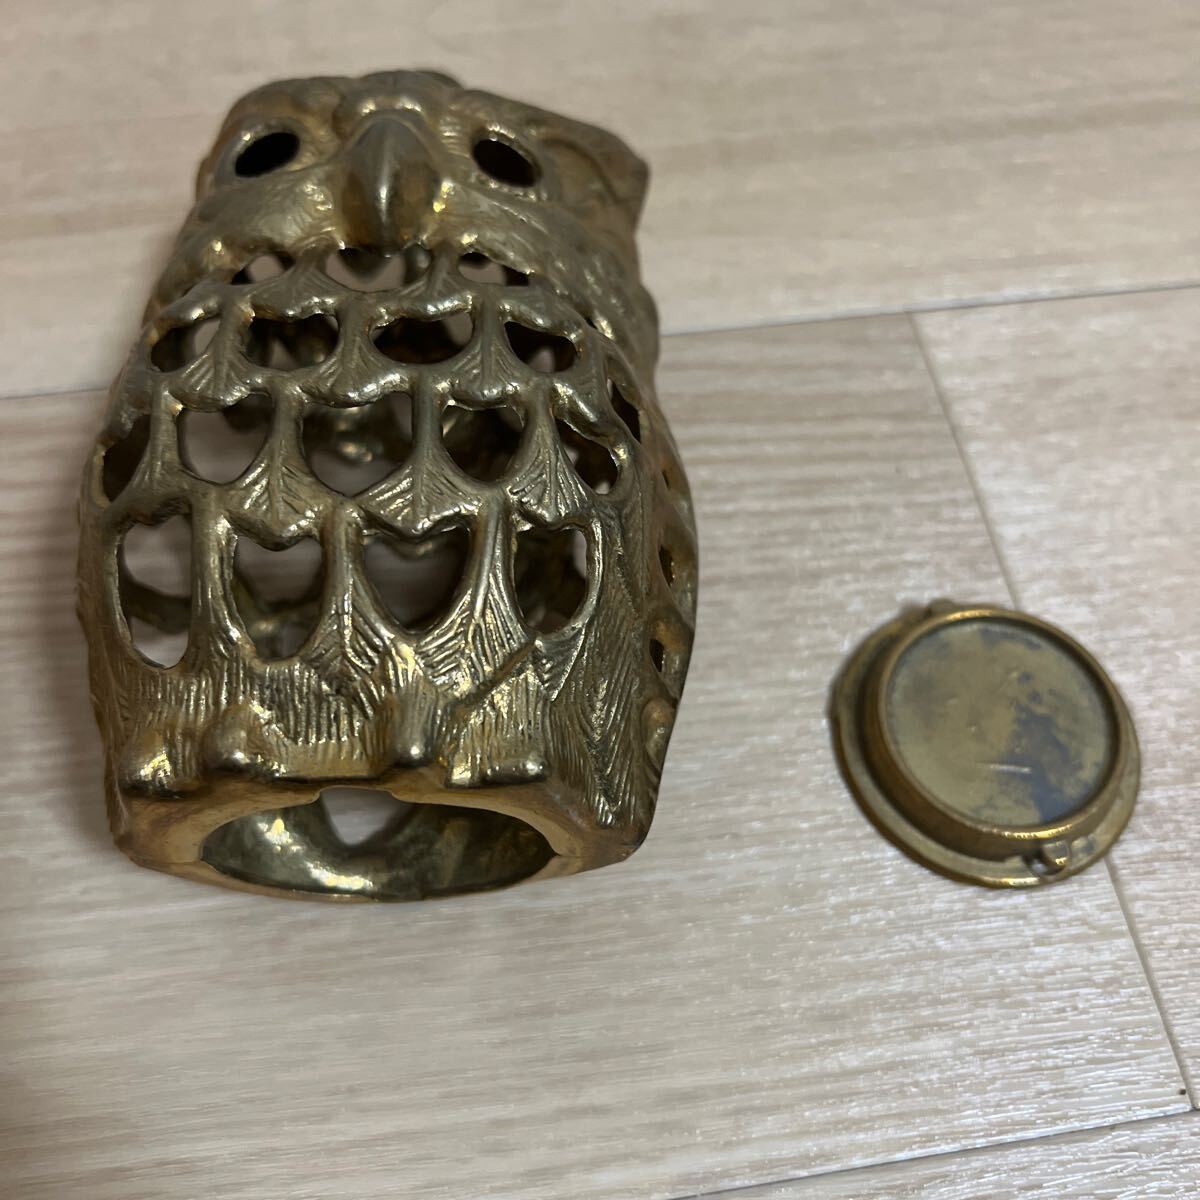  antique ornament owl interior objet d'art candle holder 